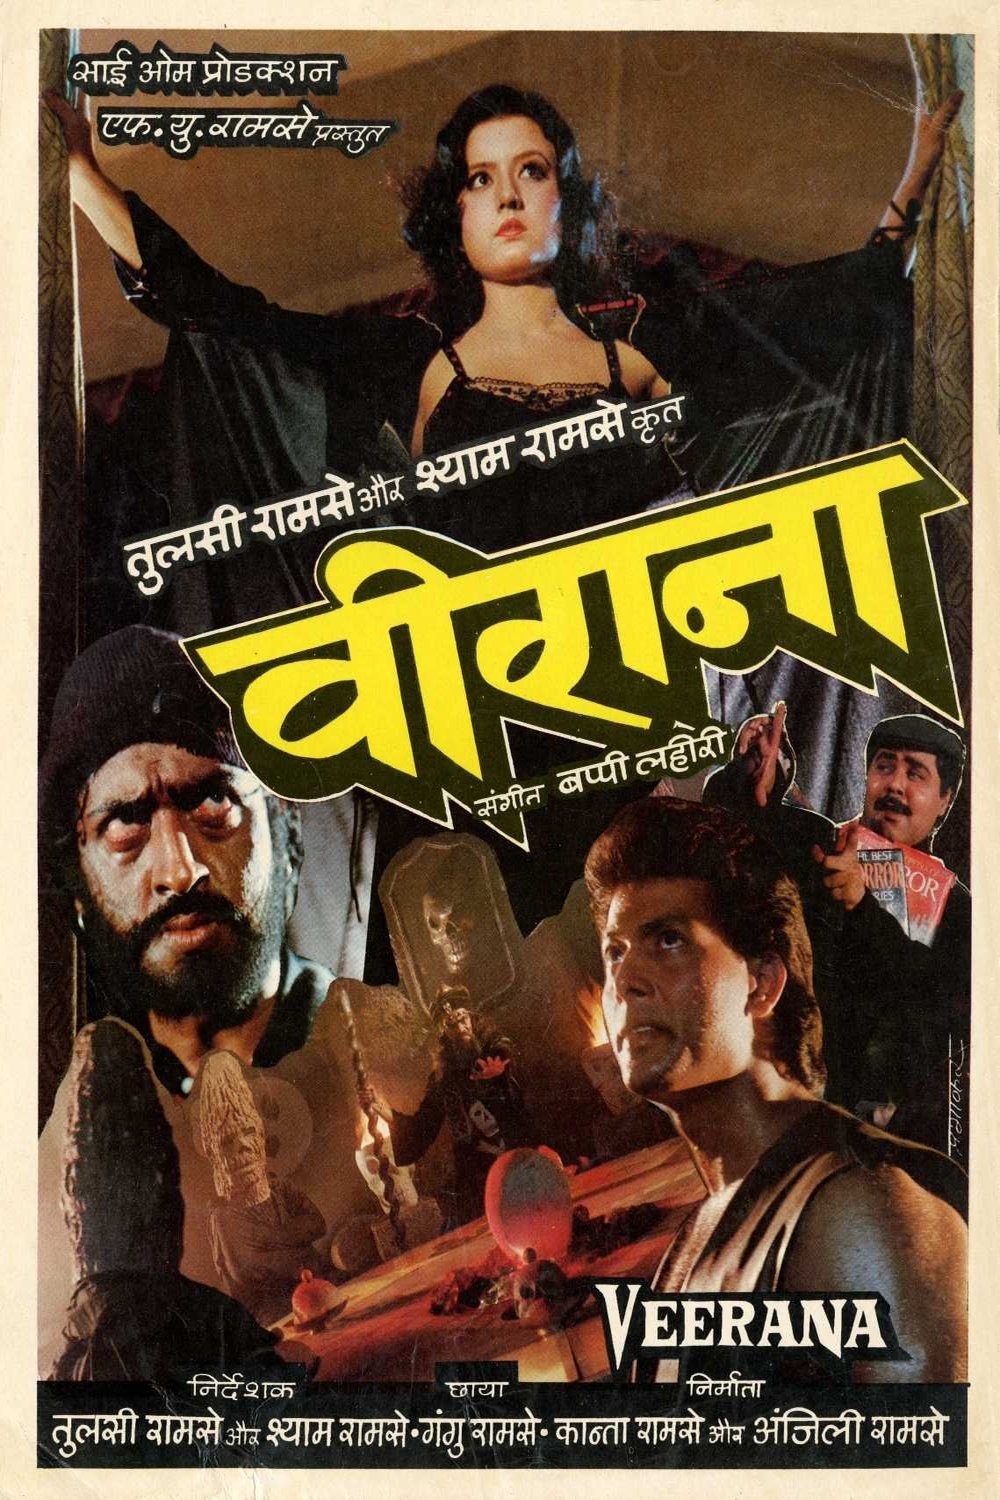 Hindi poster of the movie Veerana